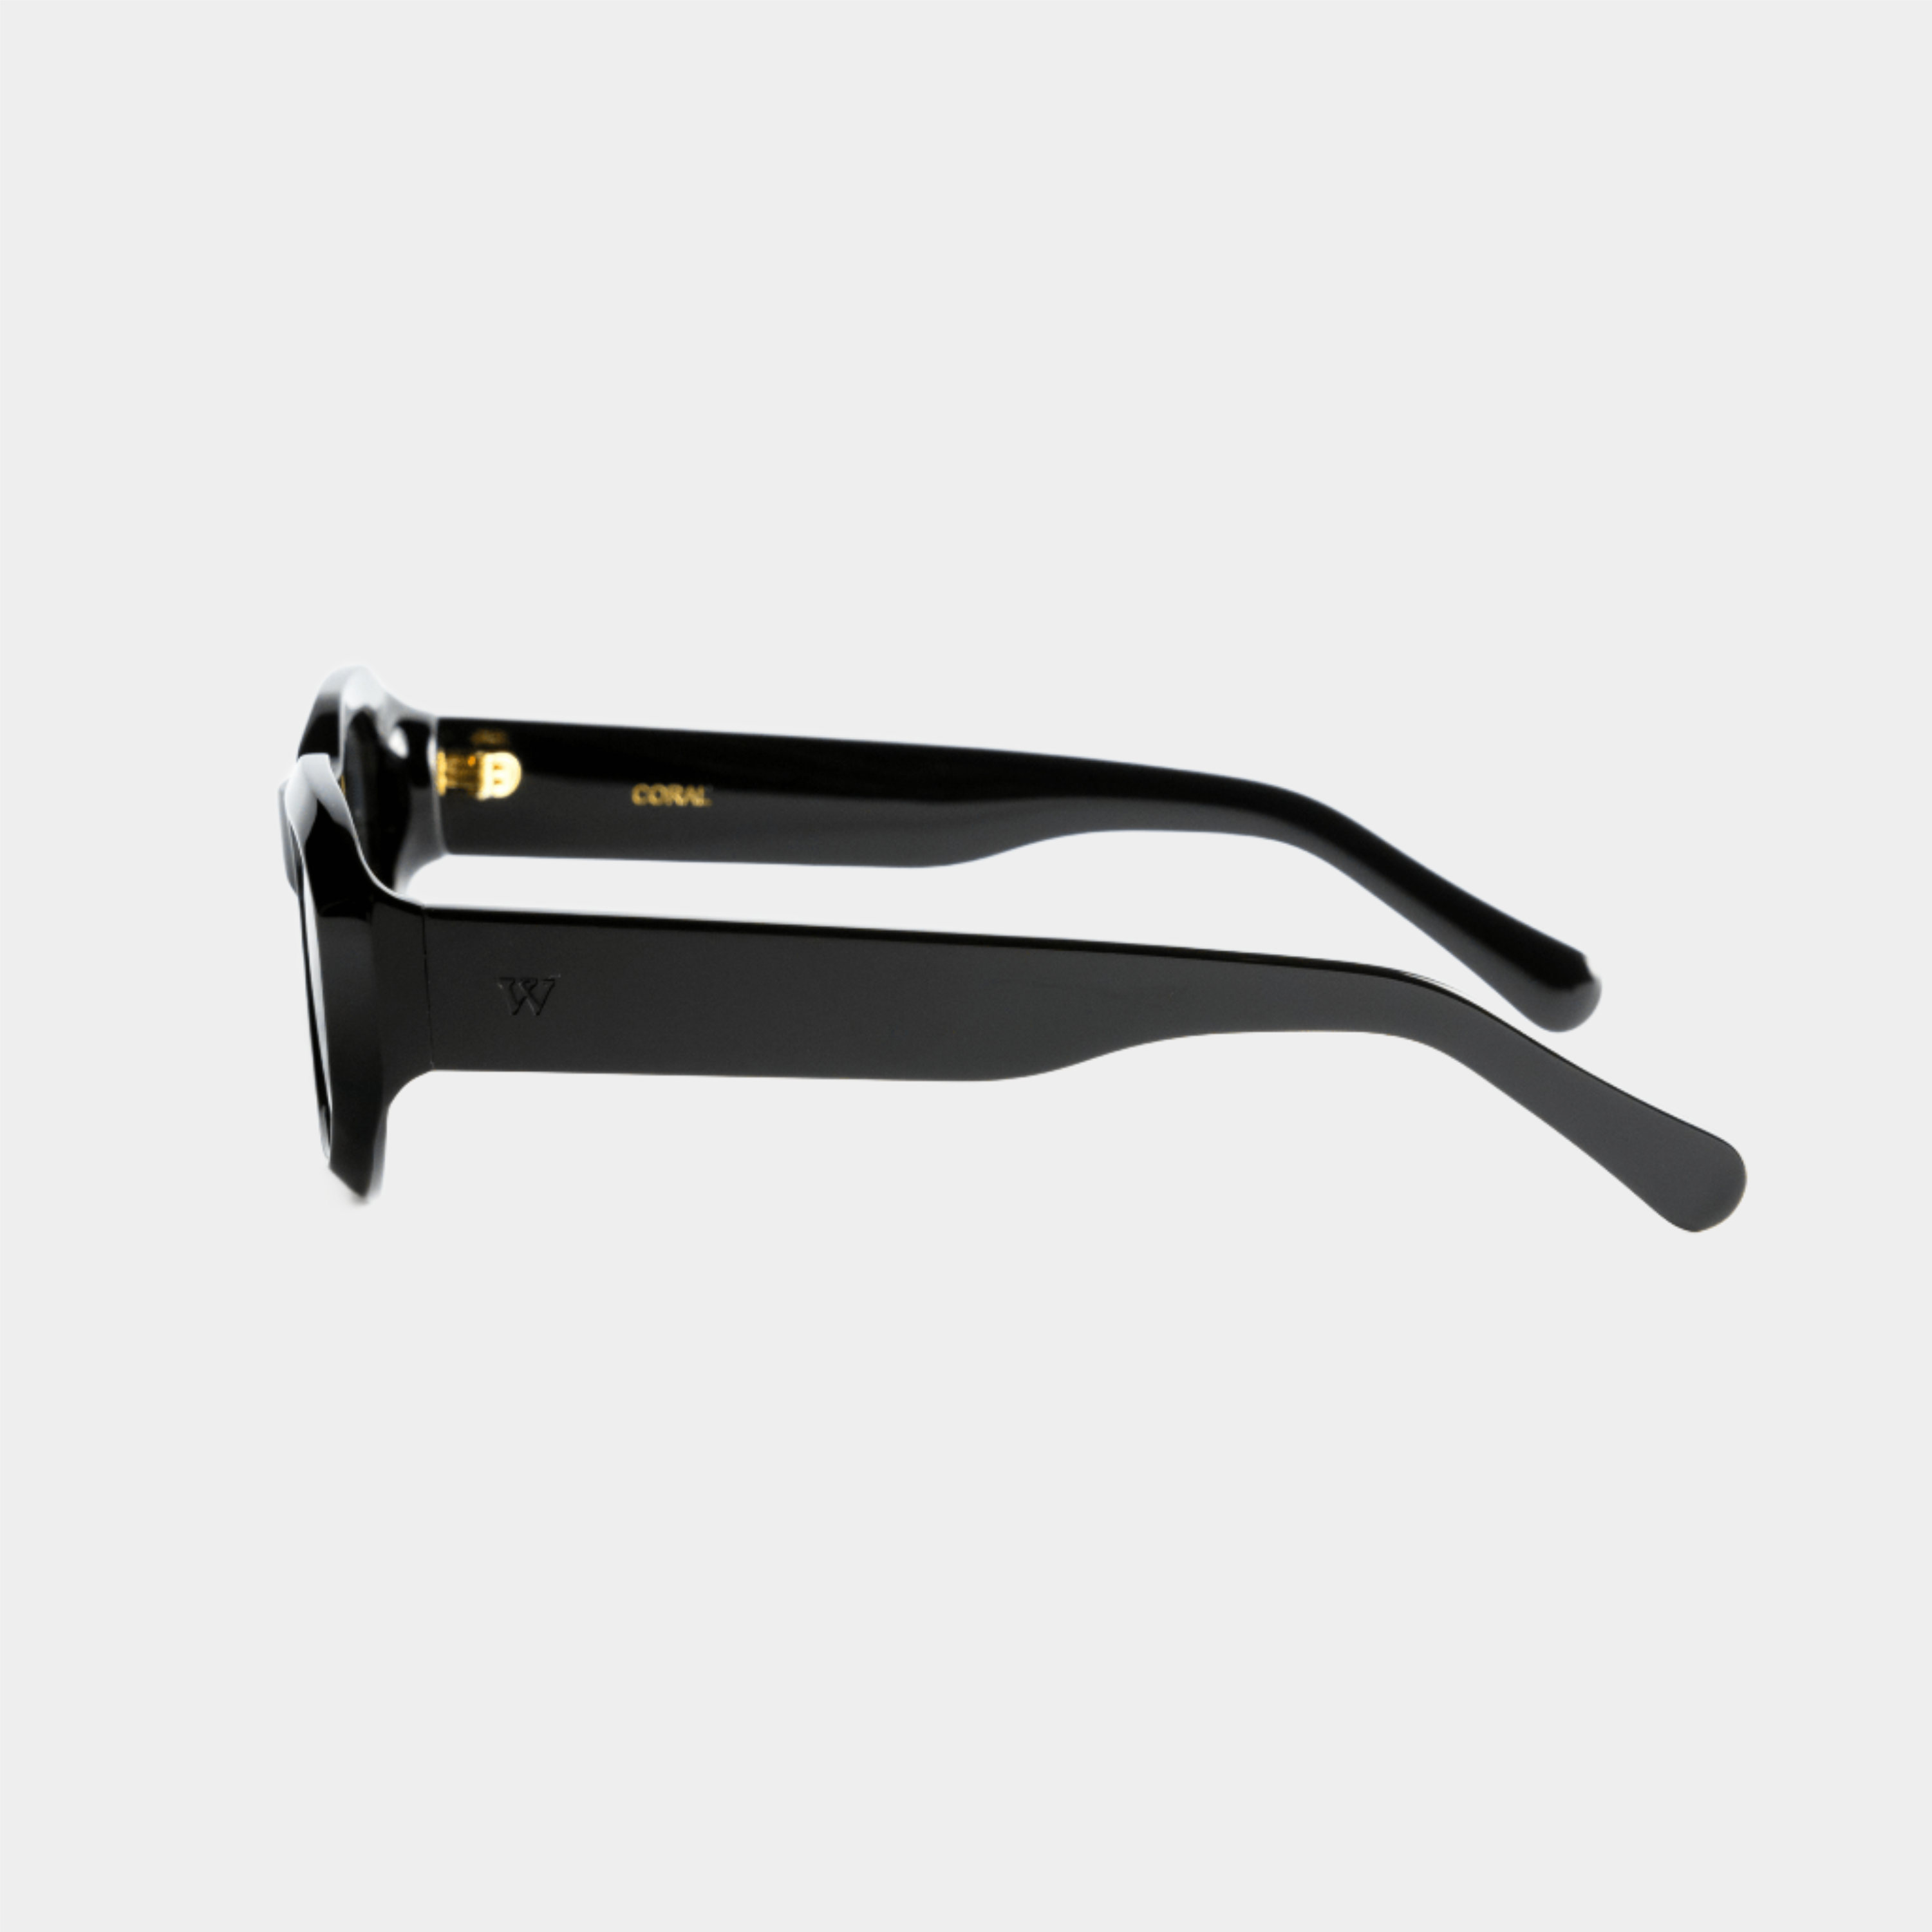 Walter Hill Sunglasses Medium/Large / Polarized Cat.3 / Mazzucchelli Acetate CORAL - Black